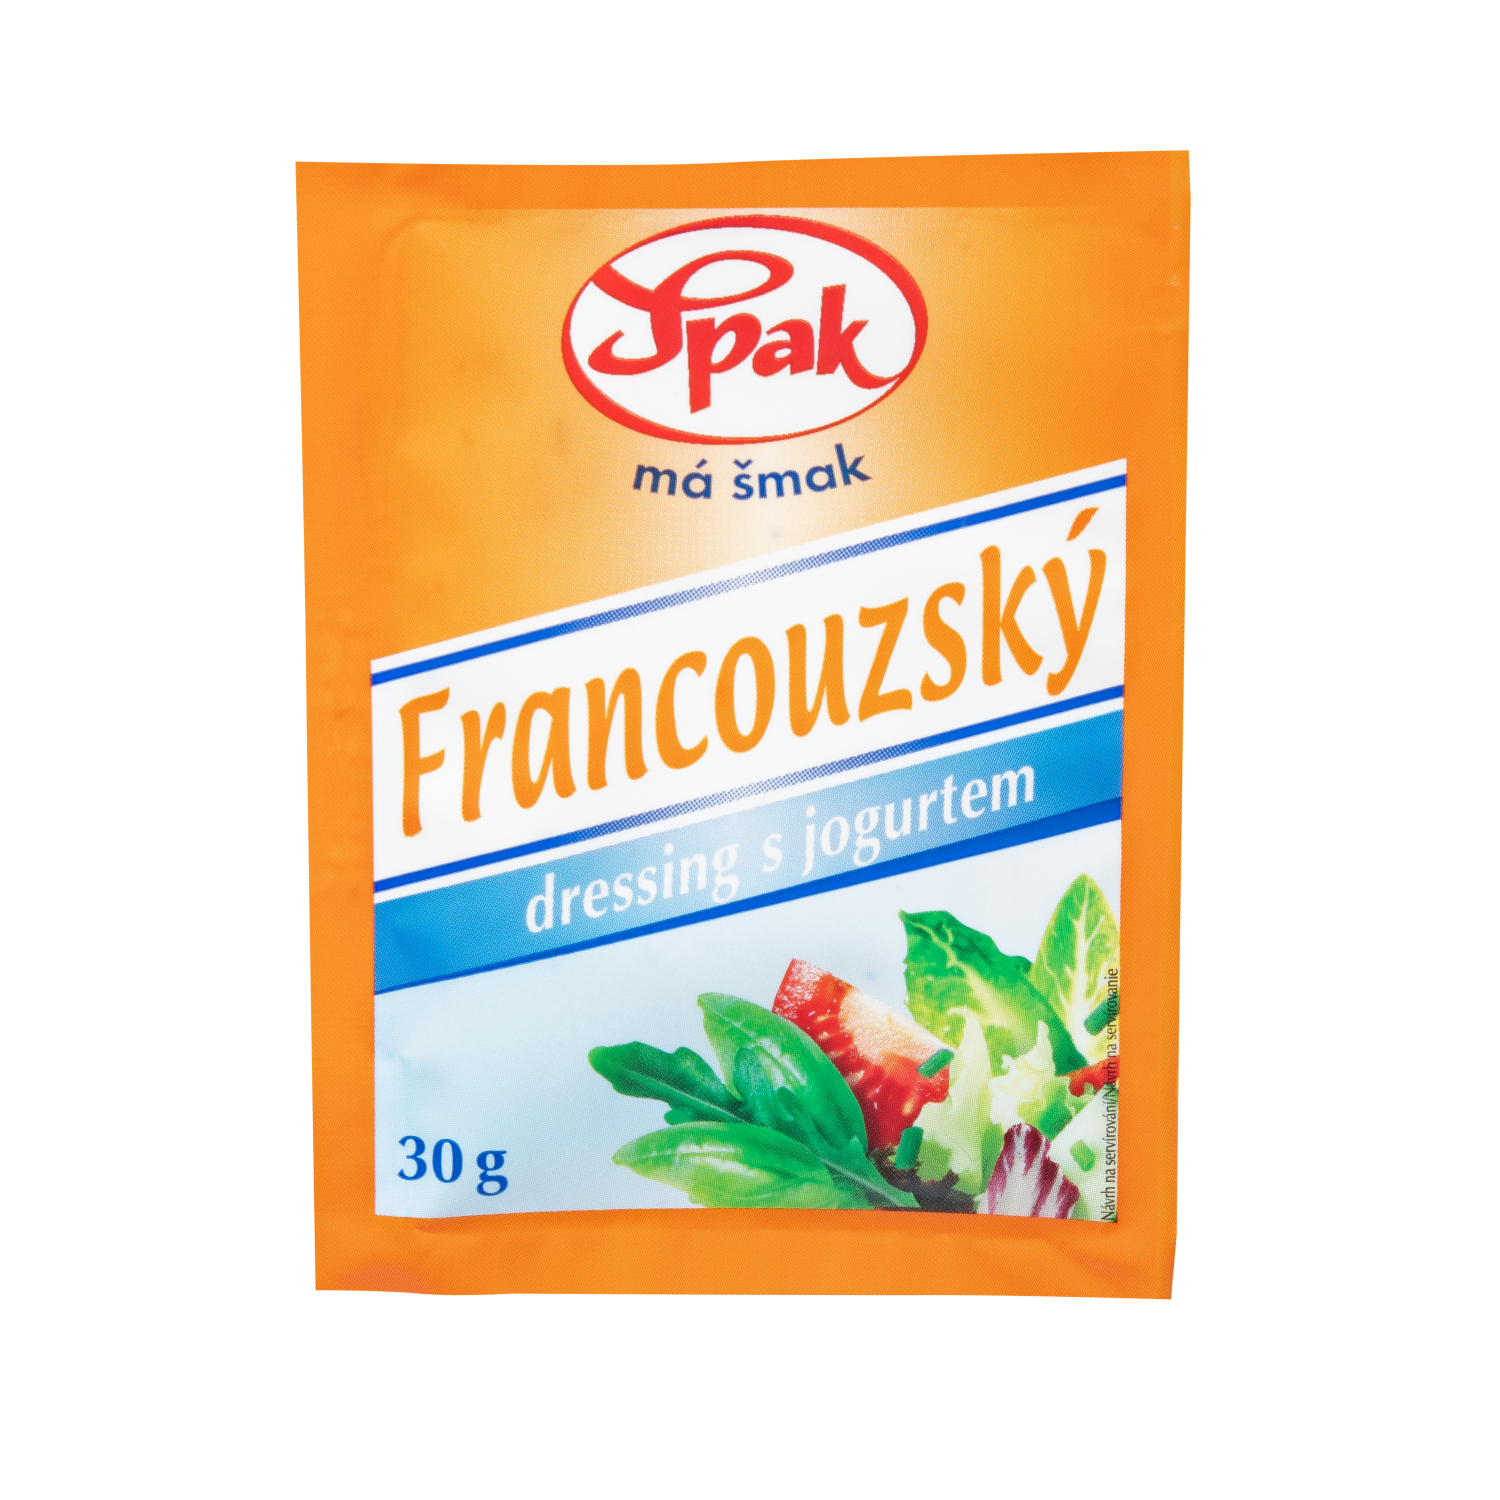 Francouzsky-dressing-30g-1